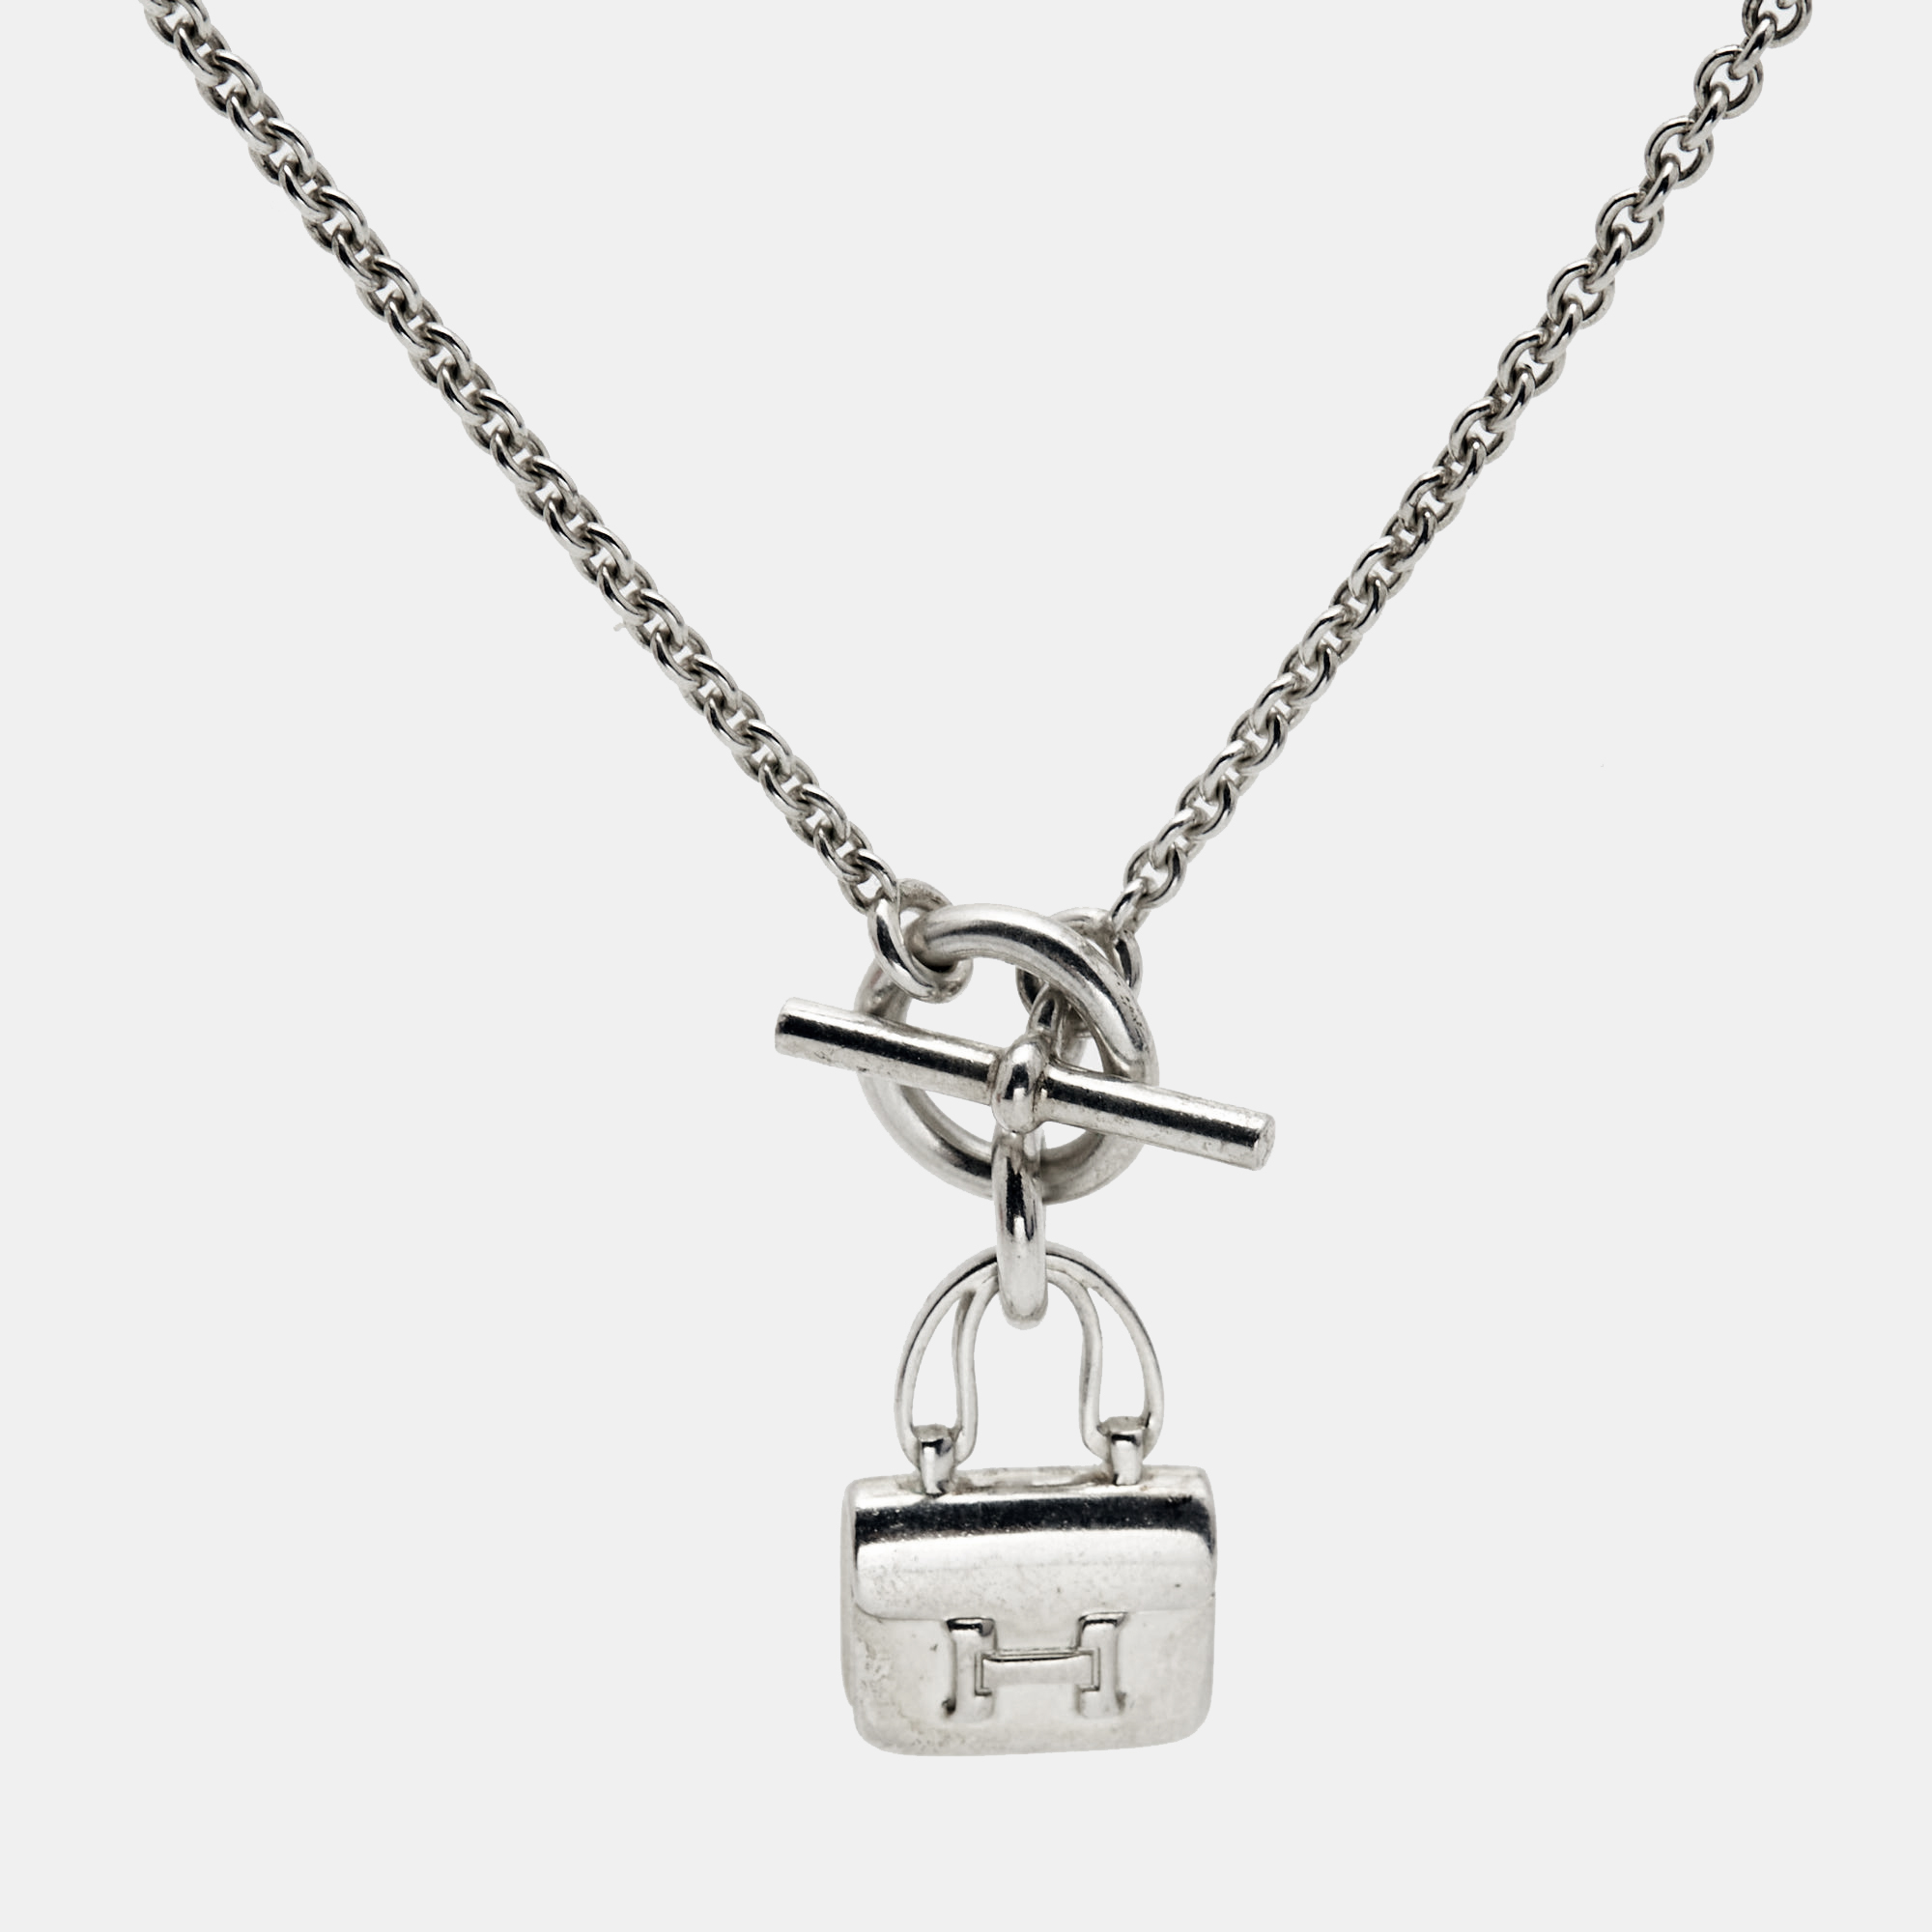 Hermes  amulettes constance sterling silver pendant necklace